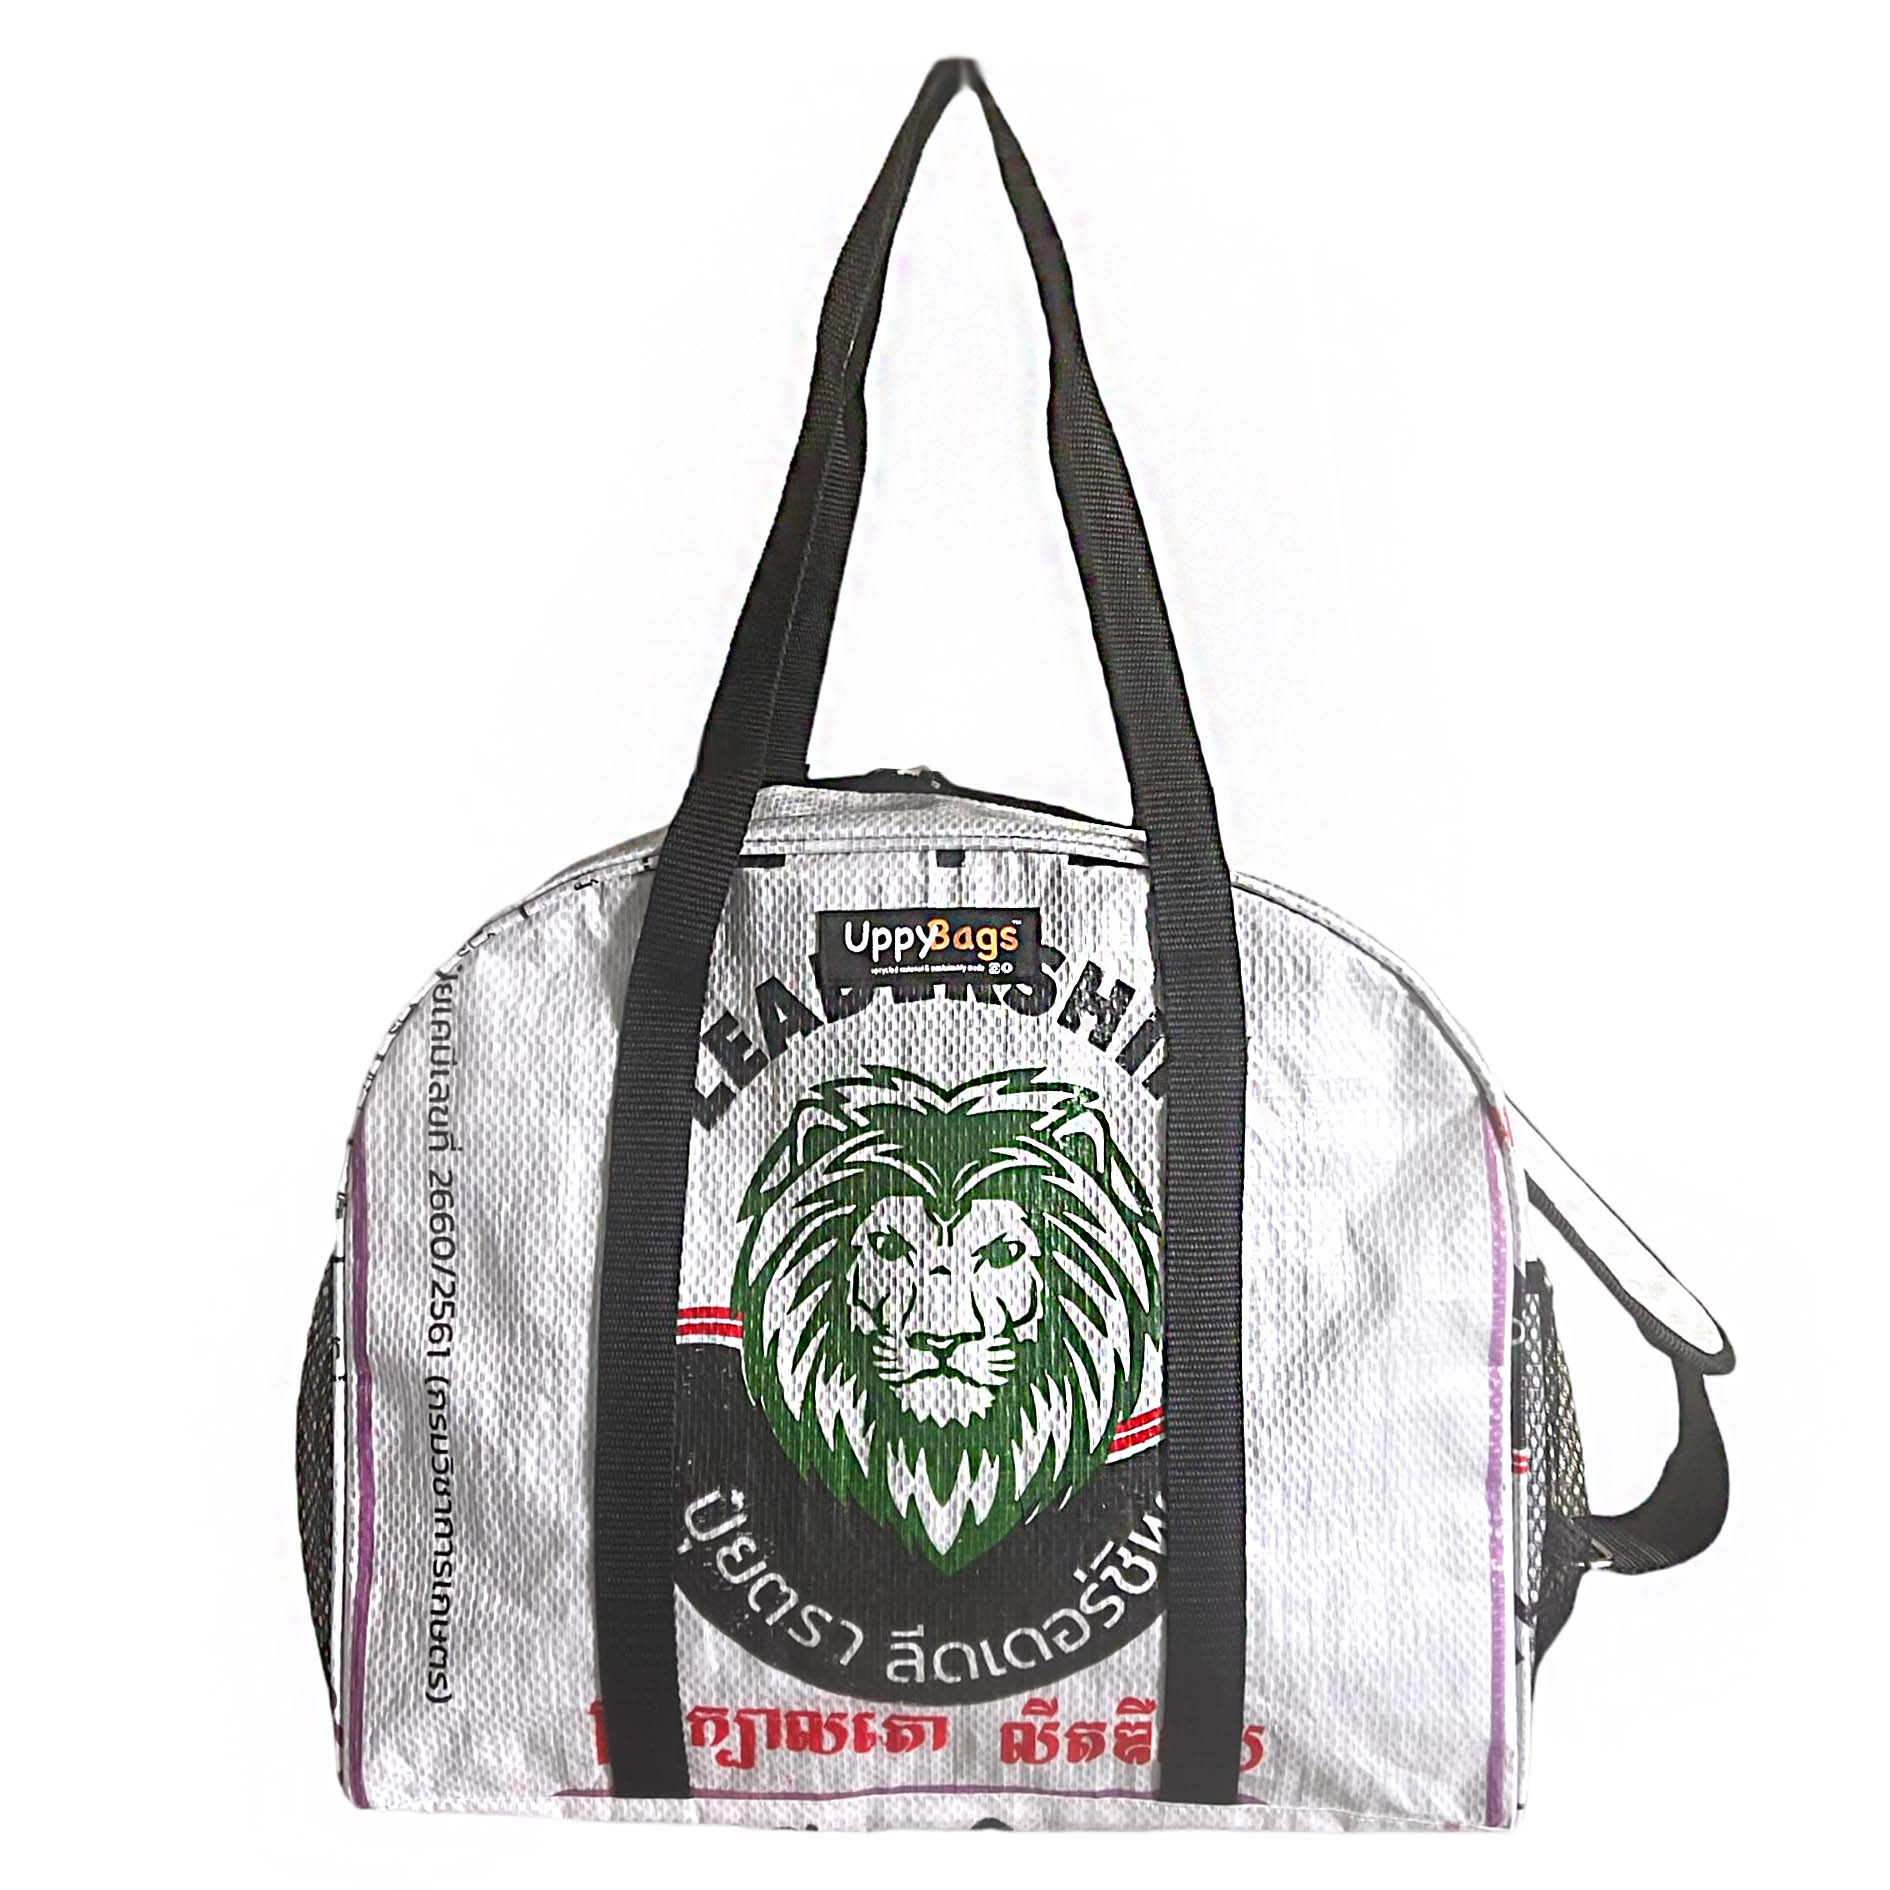 Recycled material gym bag with animal print. Tiger print gym bag  Edit alt text